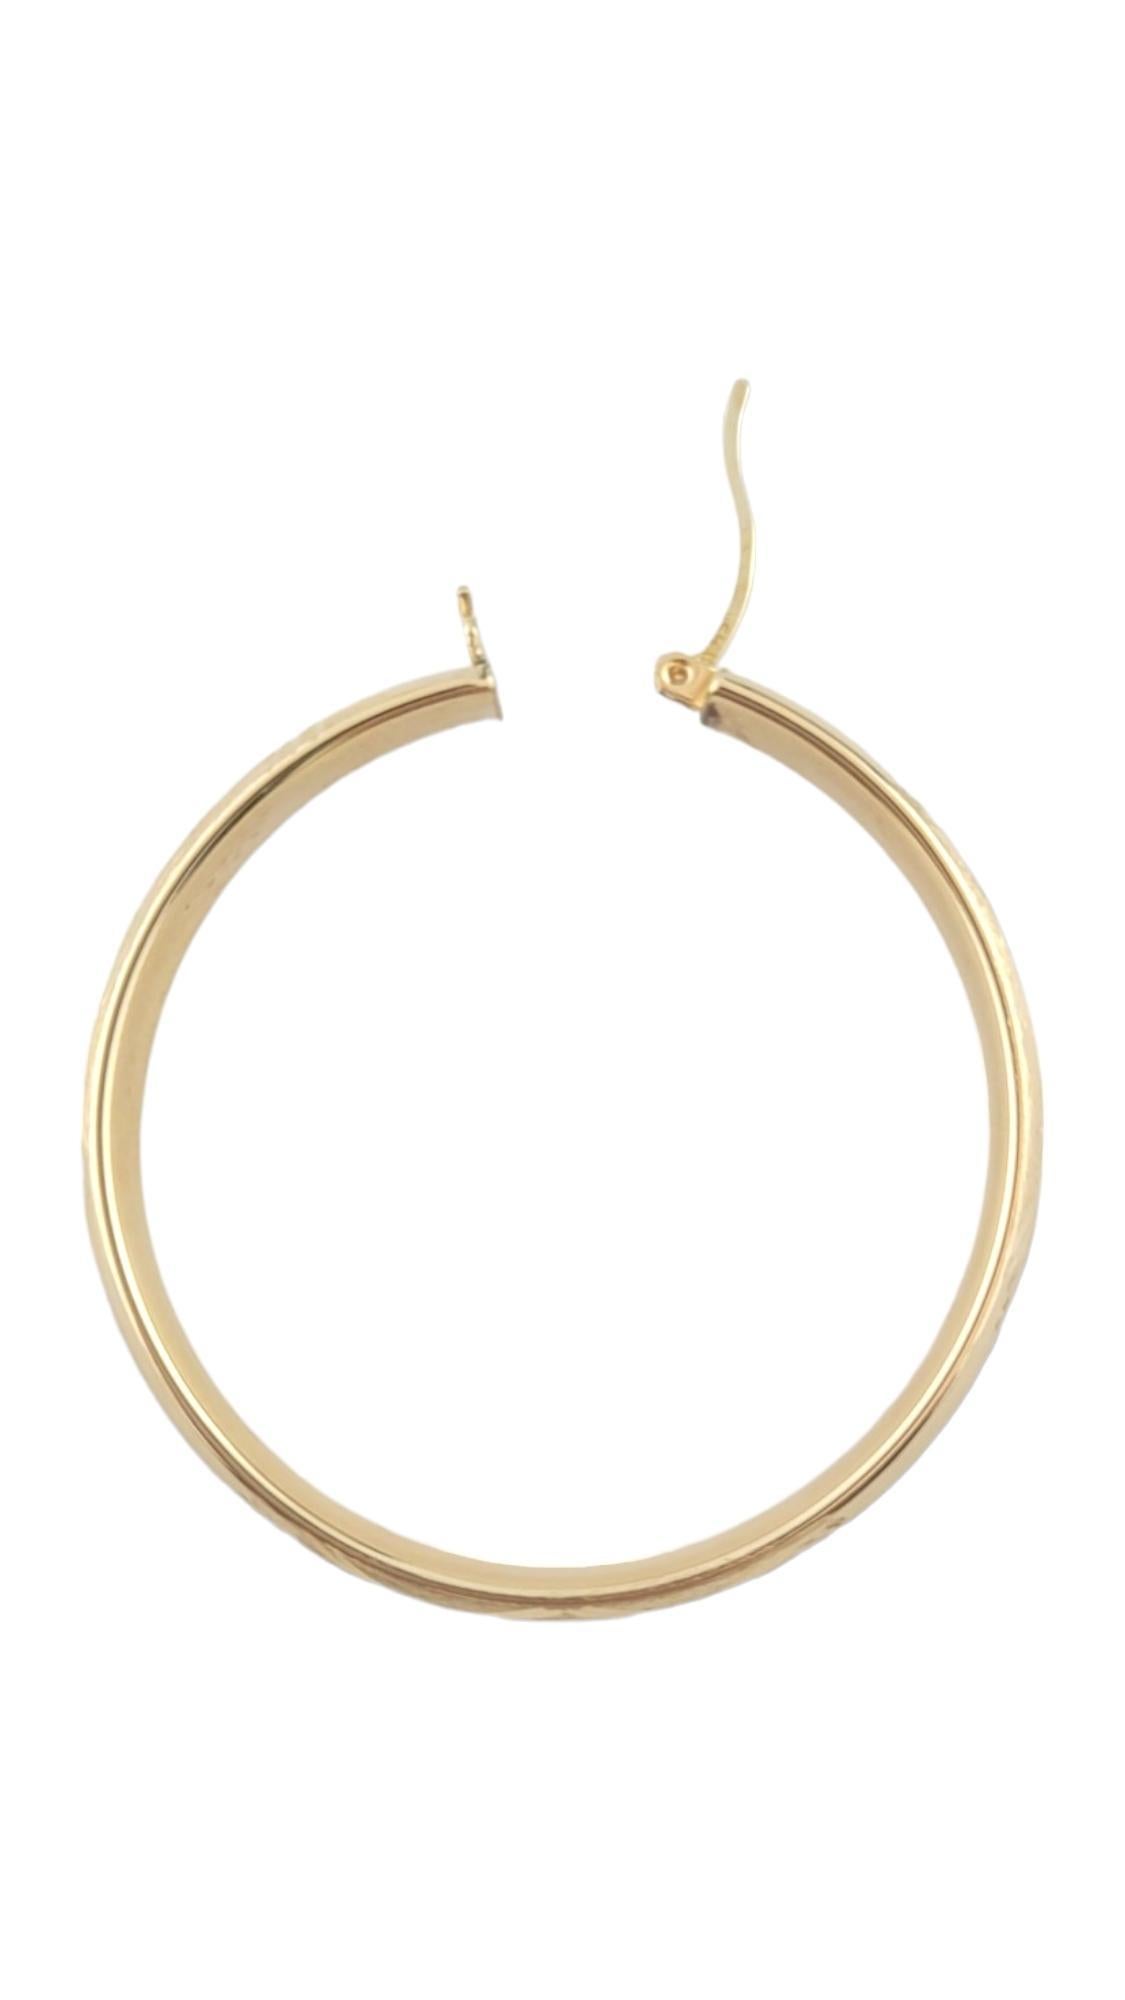 14K Yellow Gold Patterned Hoop Earrings #16196 For Sale 1